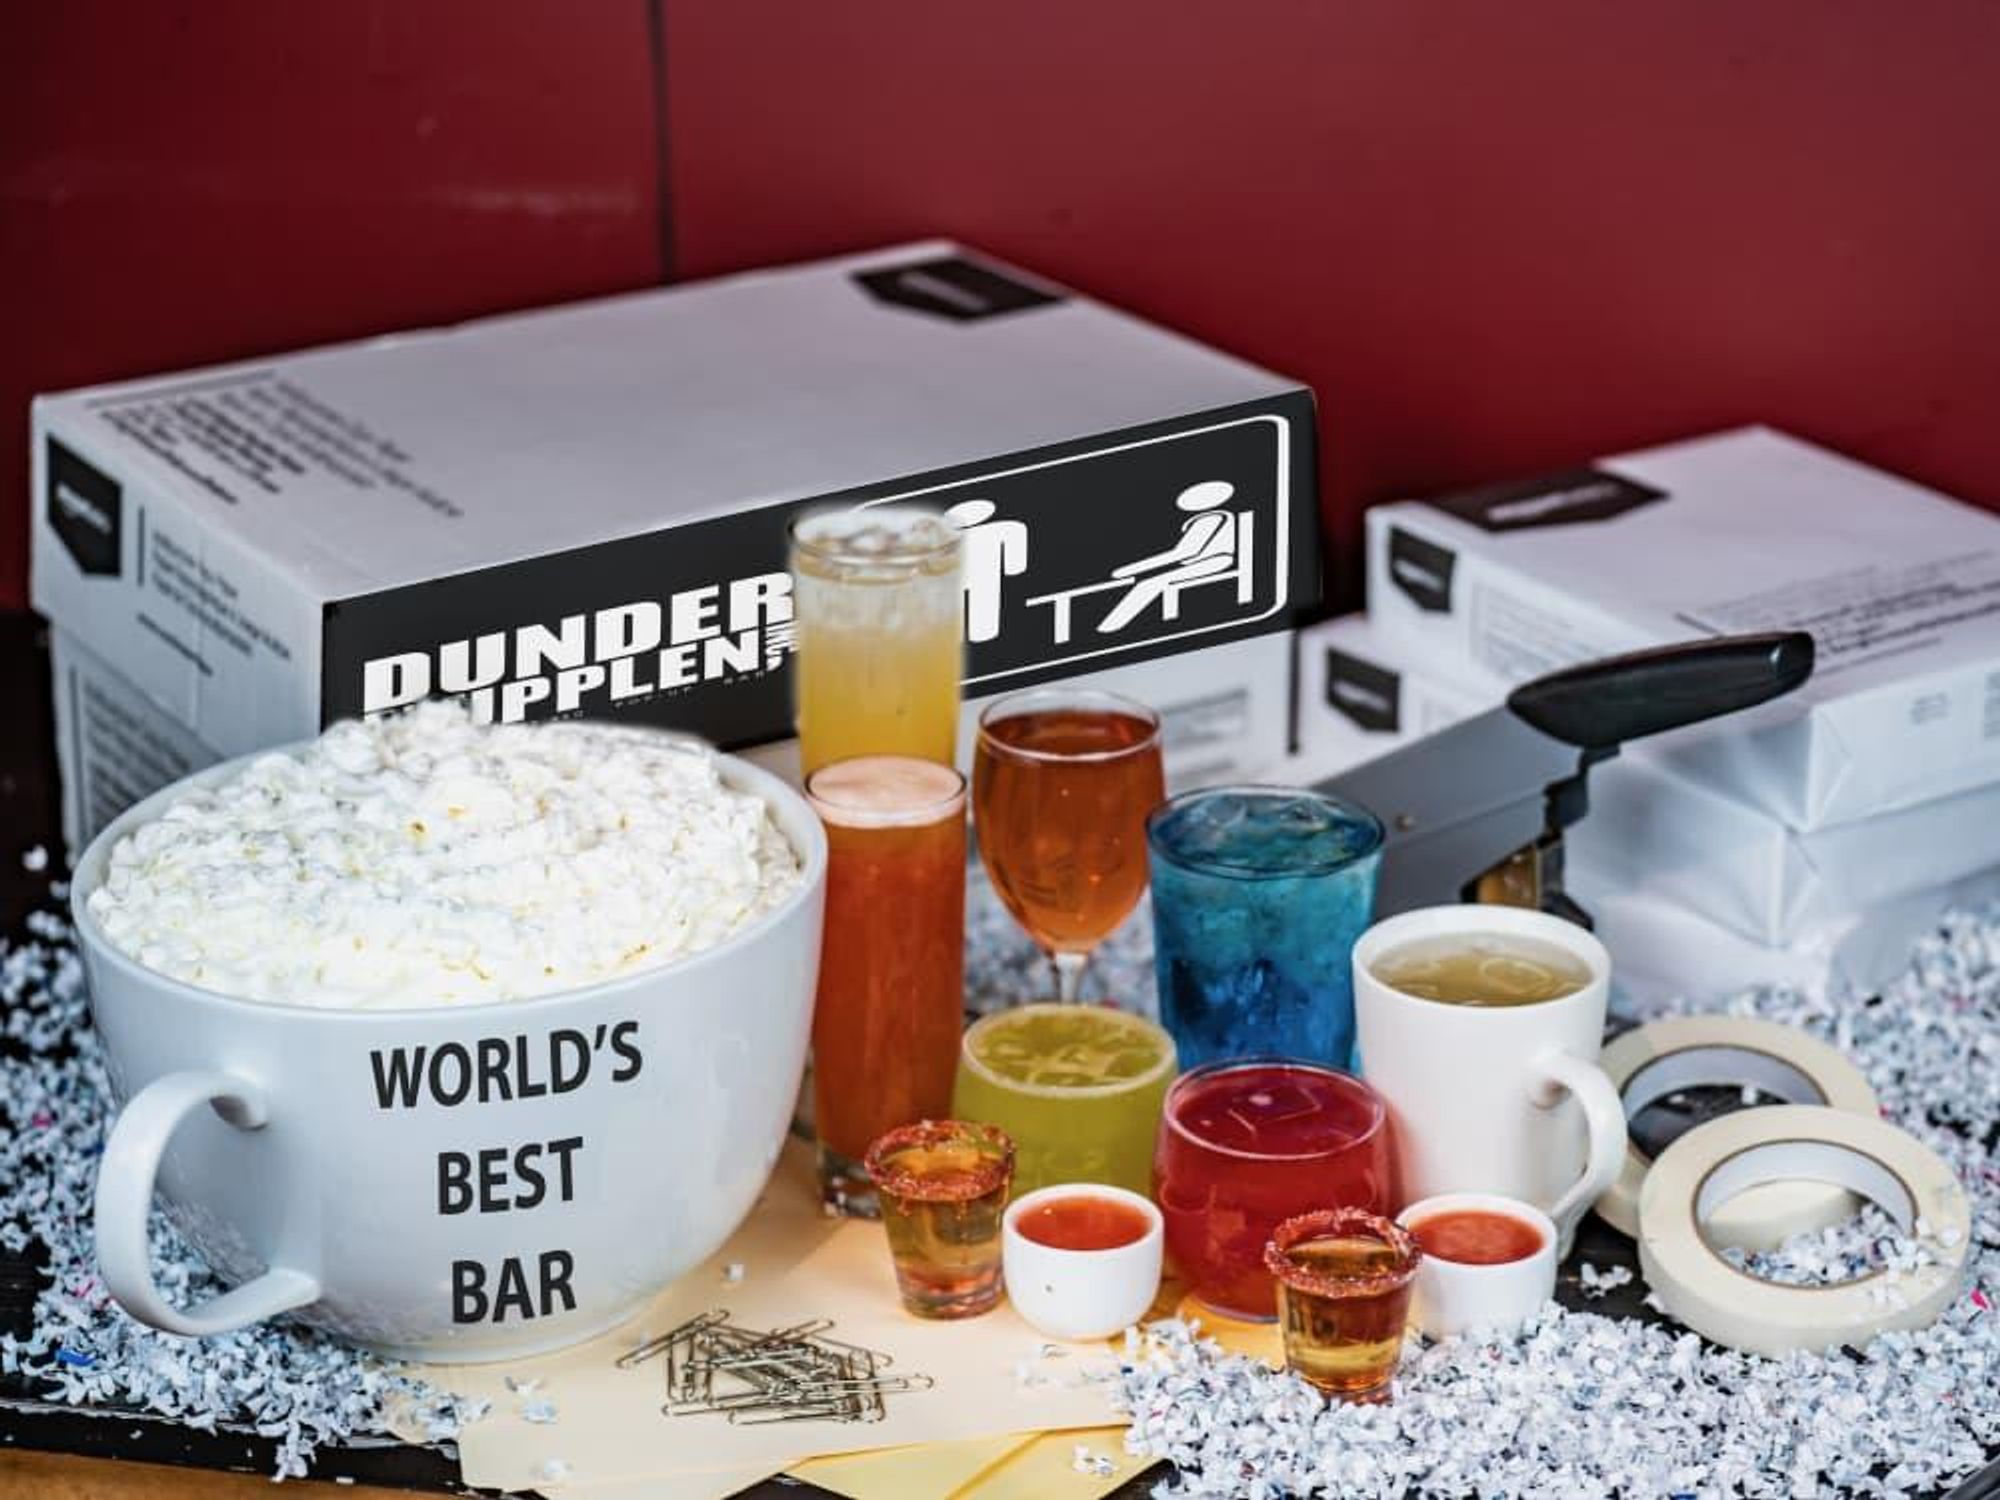 Dunder Mupplen Office pop-up bar cocktails